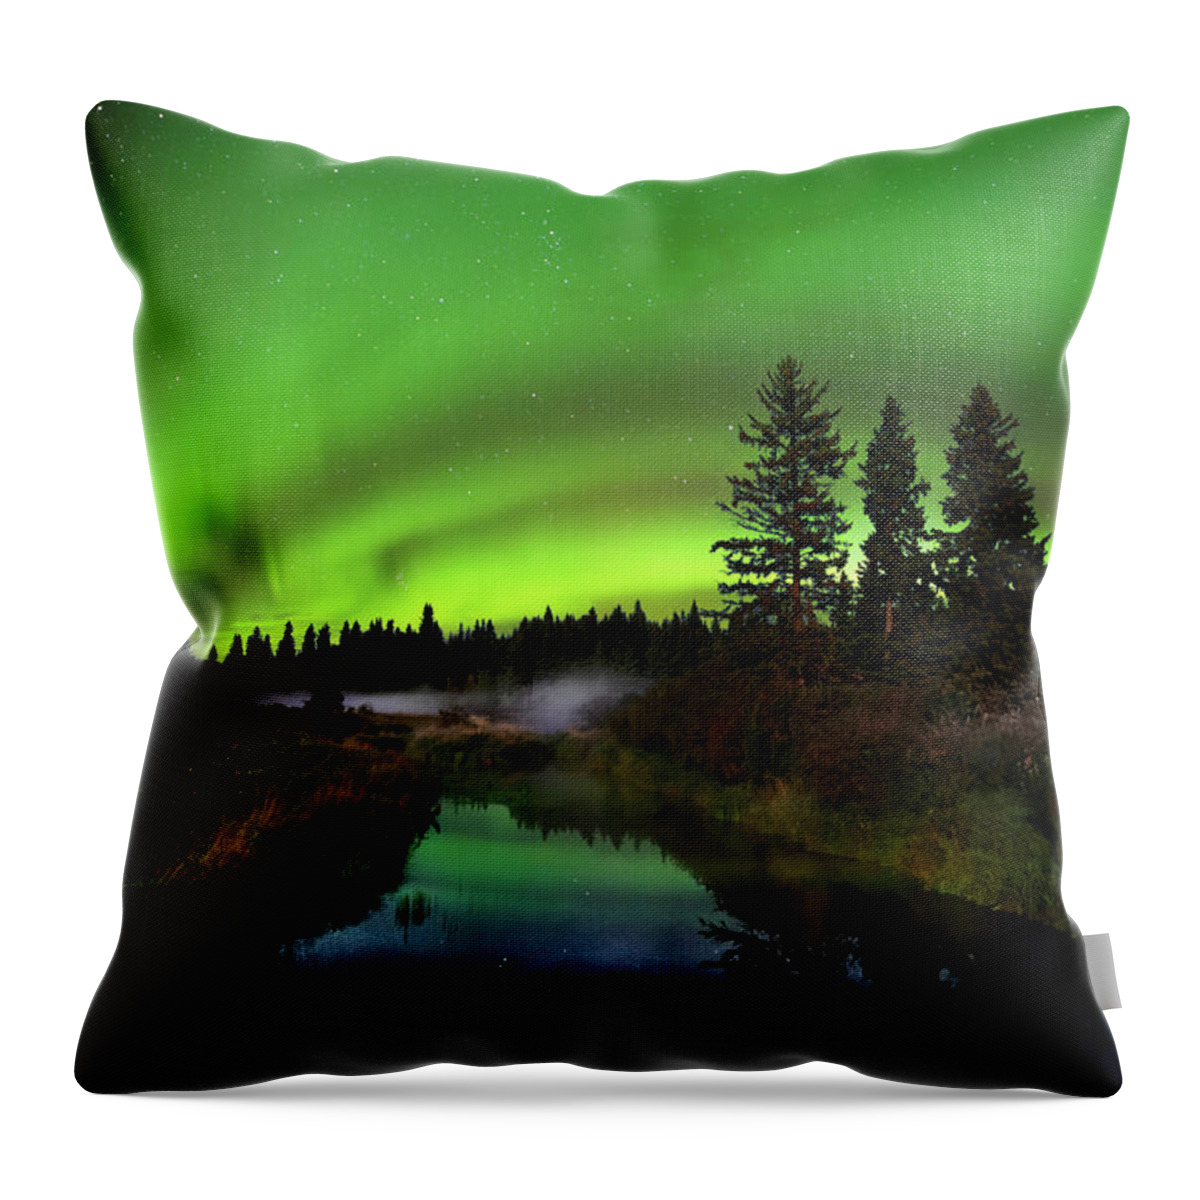 Landscape Throw Pillow featuring the photograph Aurora Arc by Dan Jurak